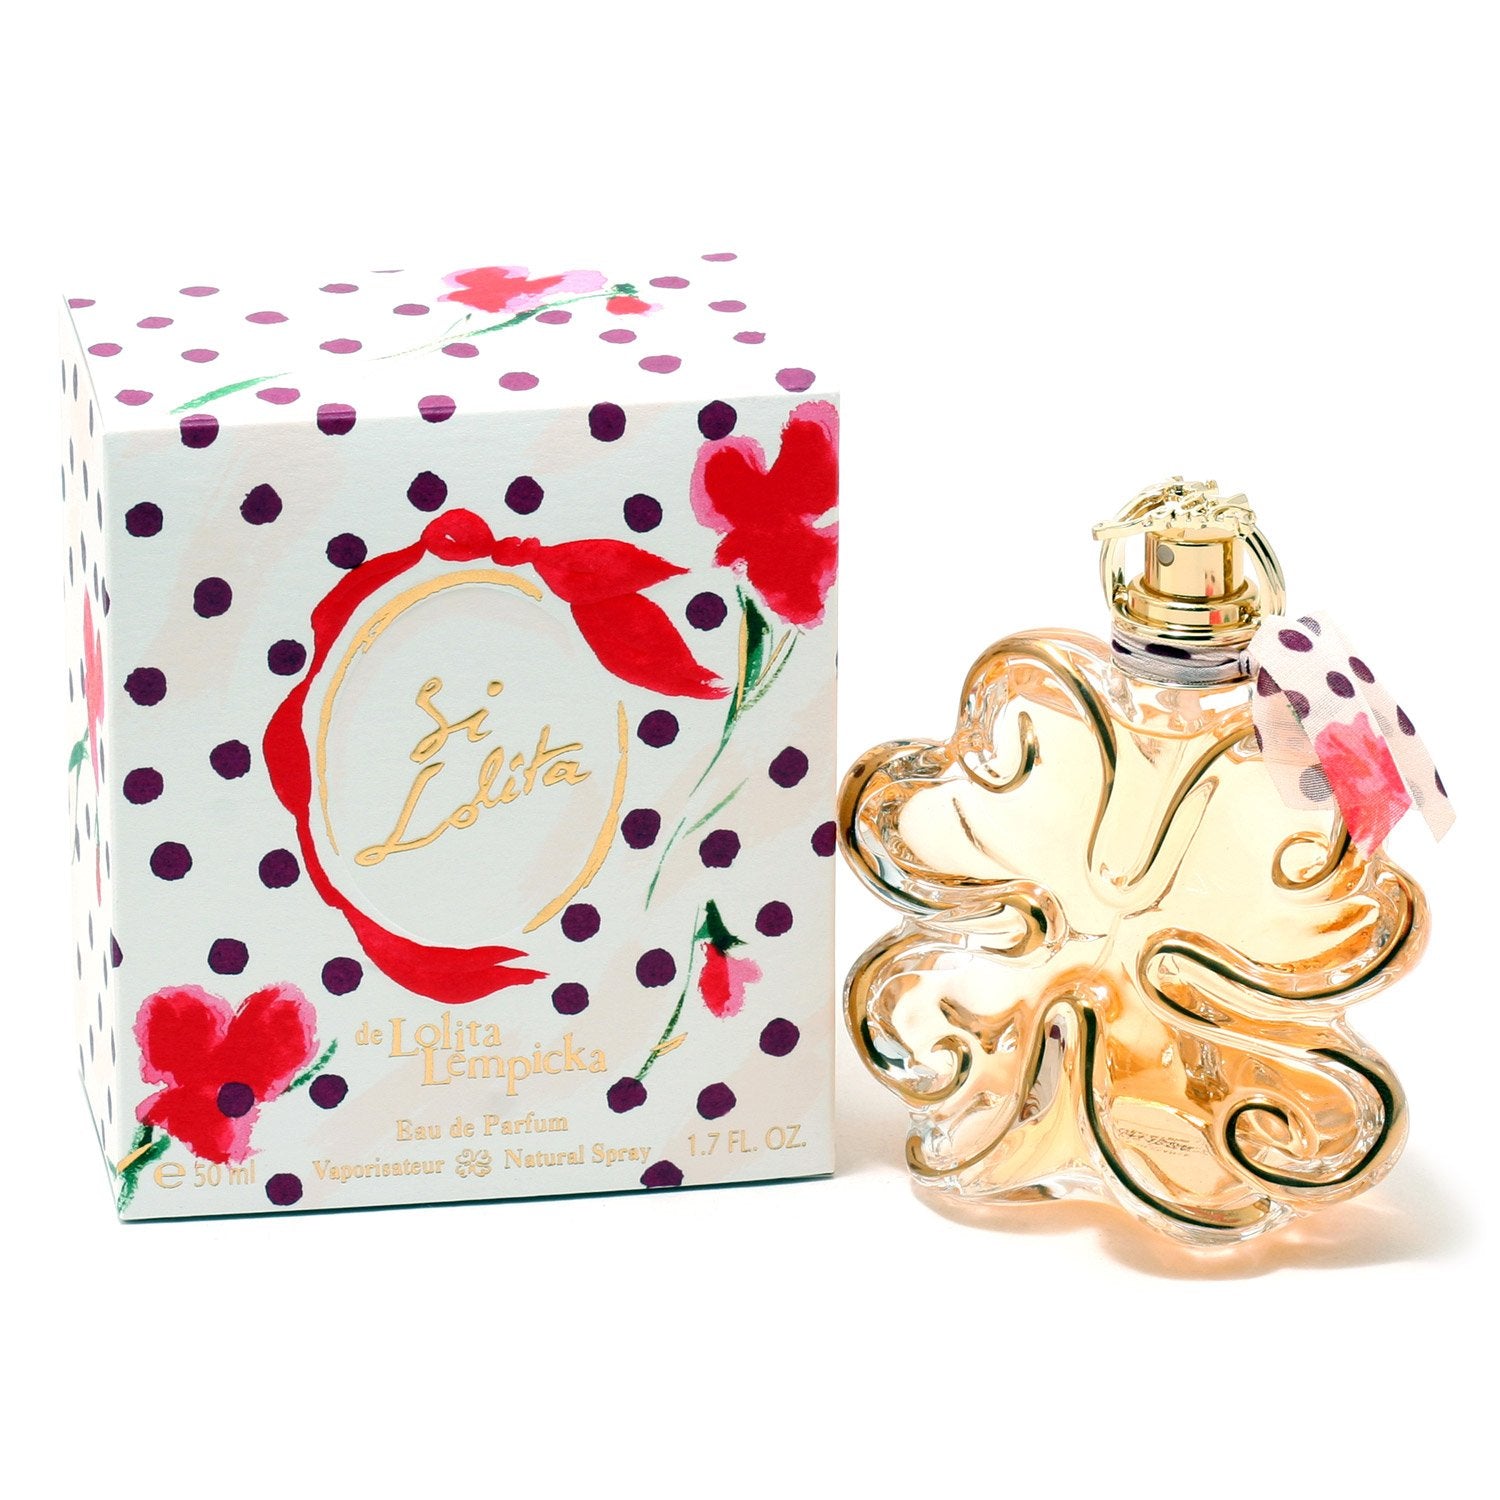 Perfume - SI LOLITA FOR WOMEN BY LOLITA LEMPICKA - EAU DE PARFUM SPRAY